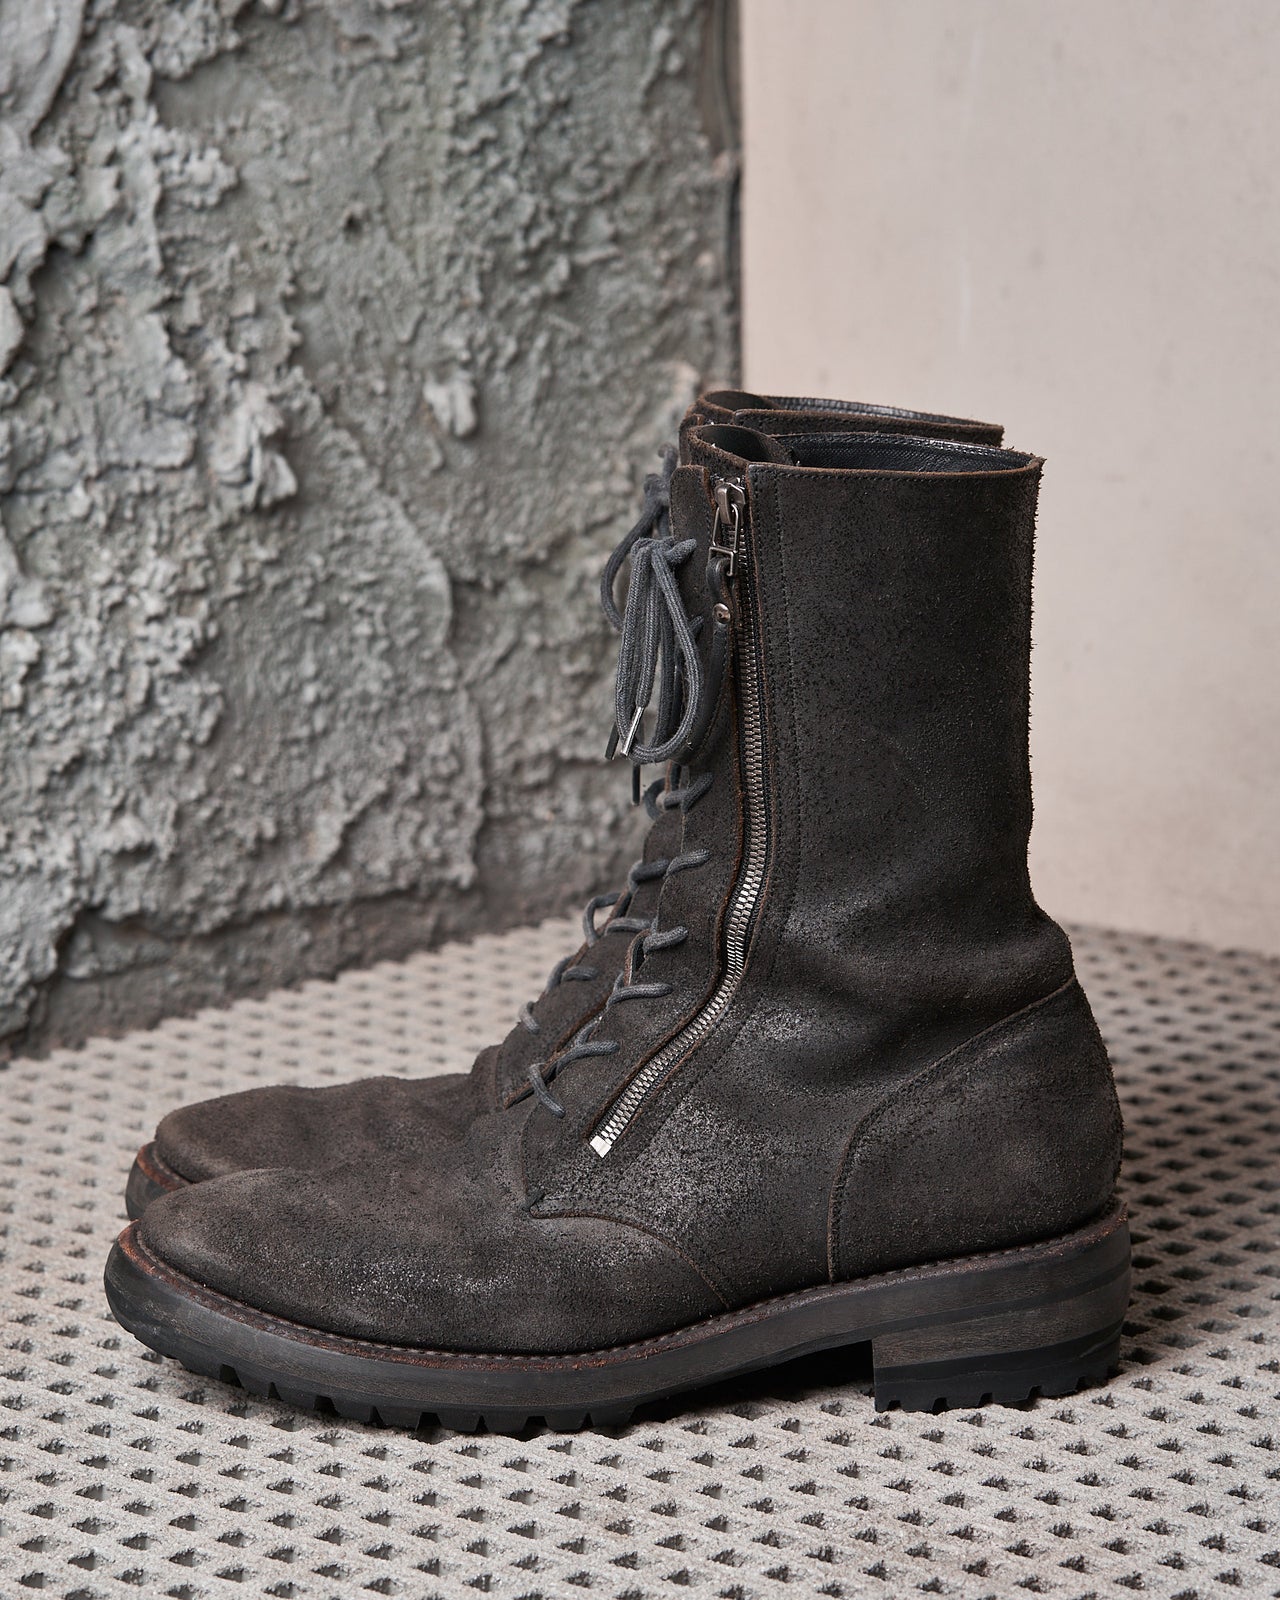 2017 Leather dual-zip combat boot